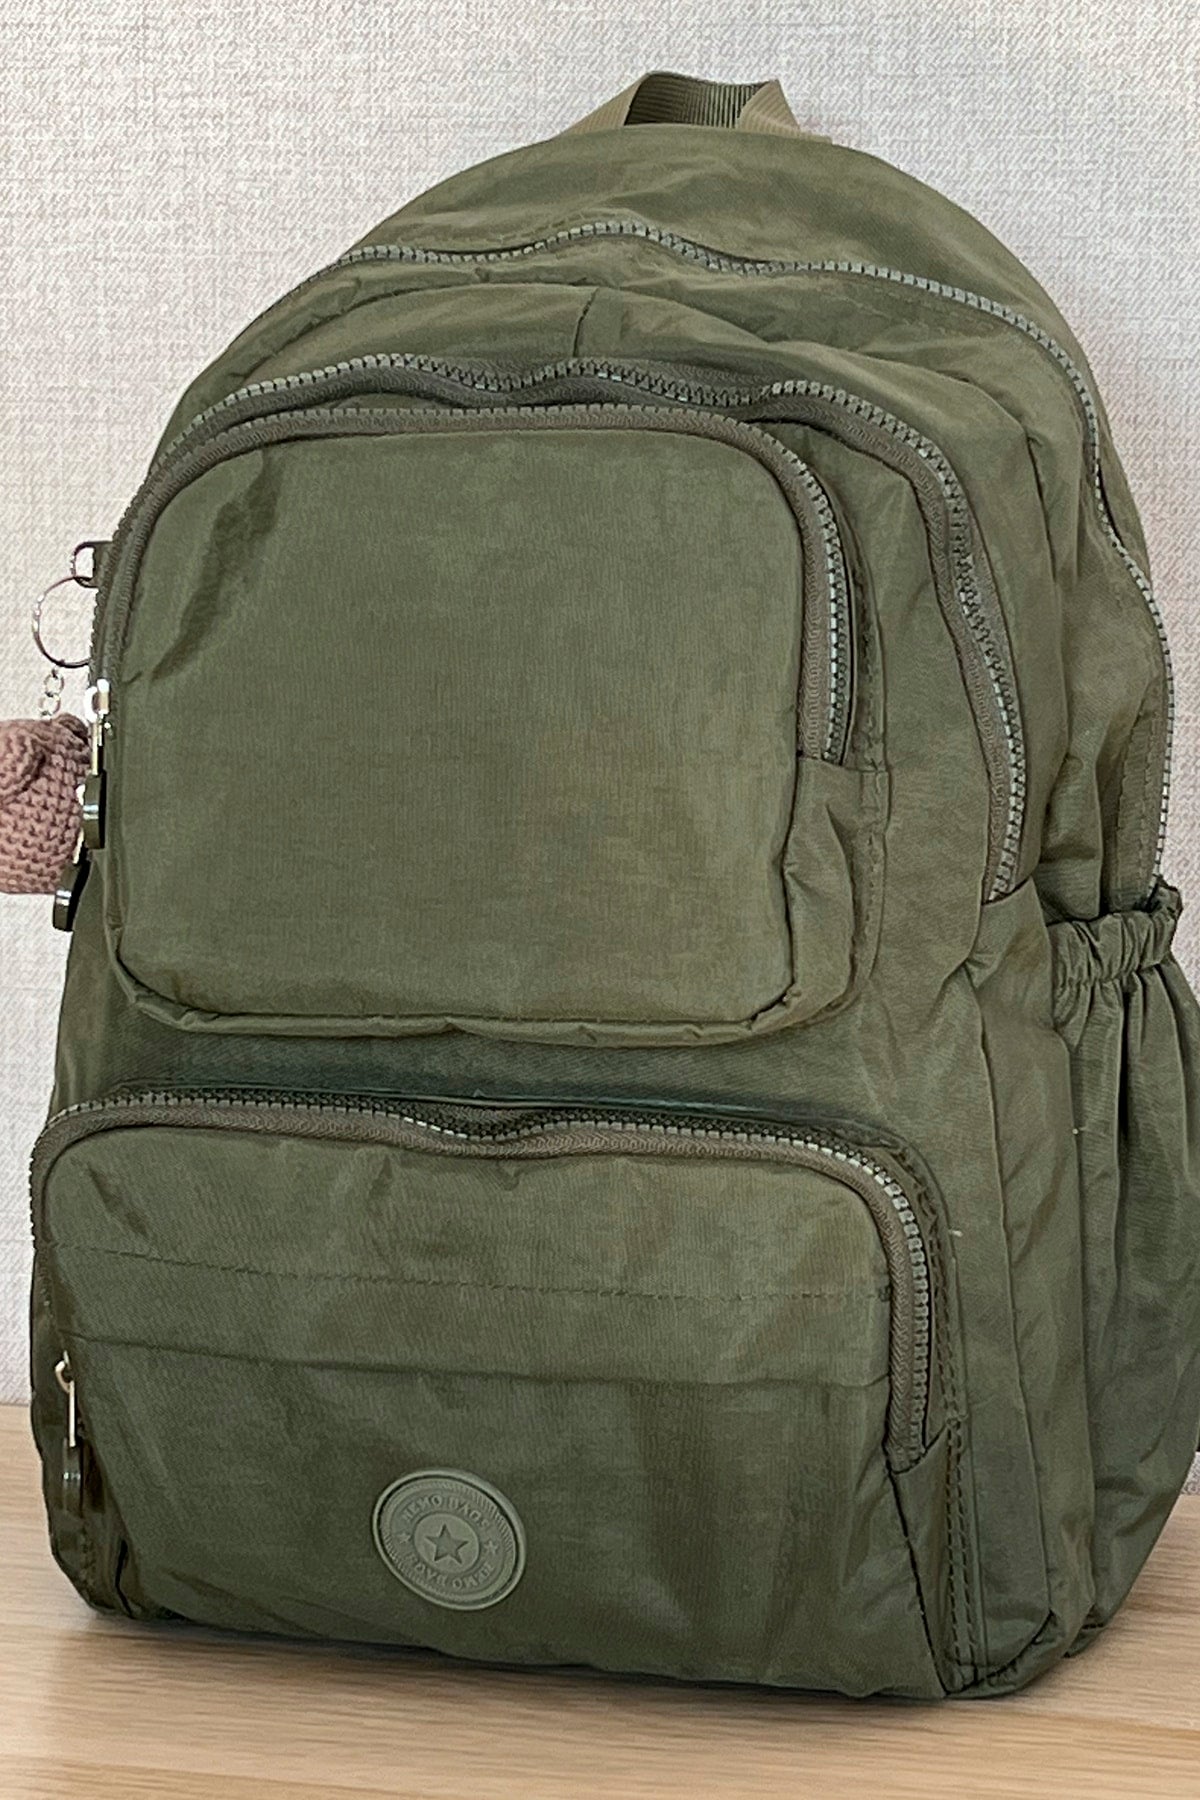 Dark Green Backpack School Bag 14 Inch Laptop Travel Bag Duomino 18 Lt 40x30x15cm